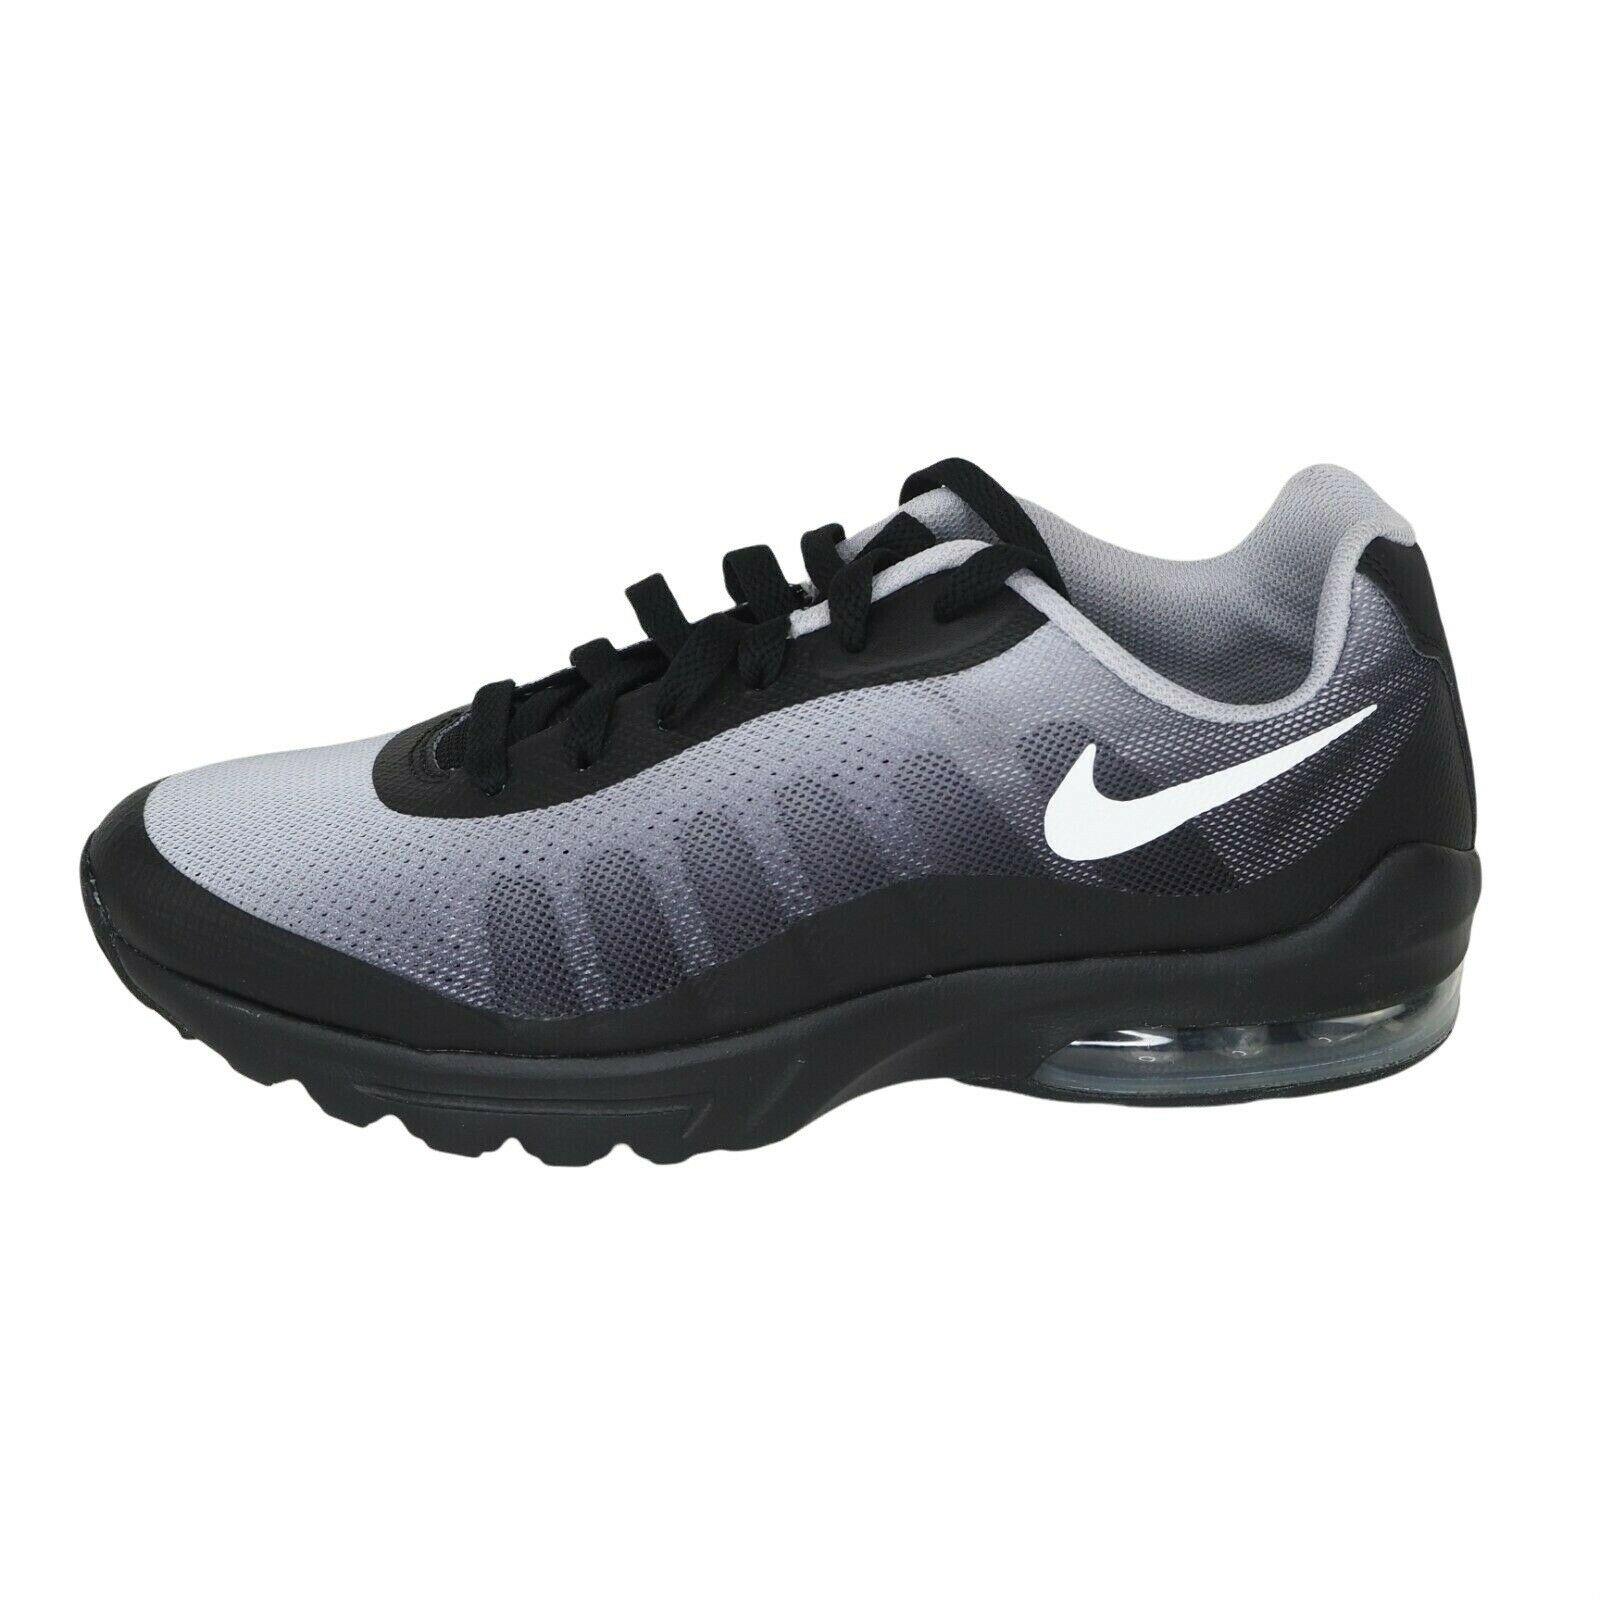 Nike Air Max Invigor Print Boys AH5258 001 Shoes Running Sneakers Black Size 6.5